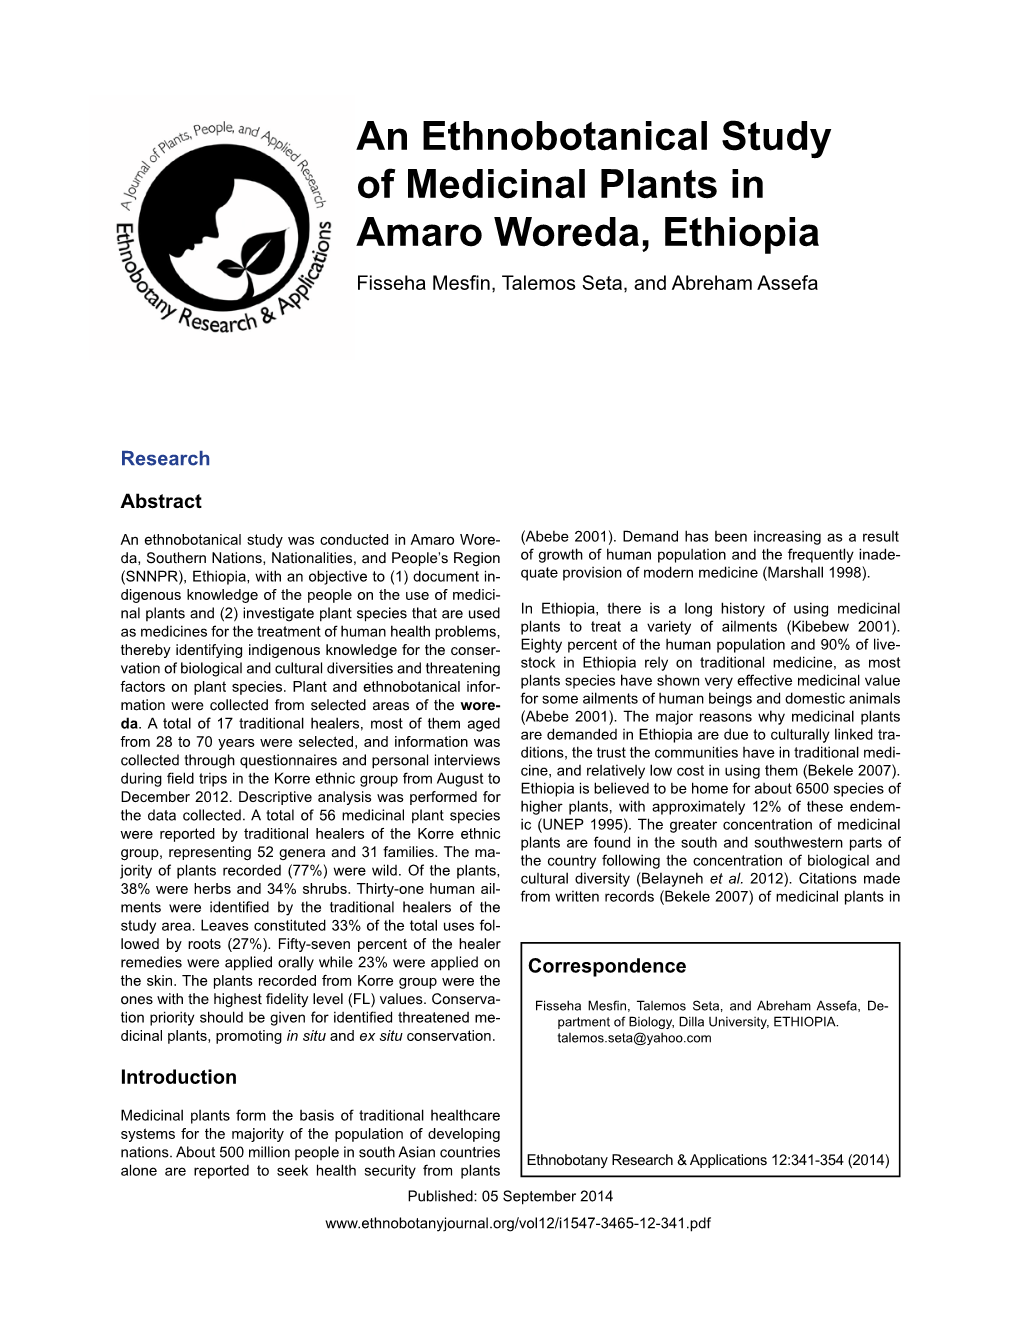 An Ethnobotanical Study of Medicinal Plants in Amaro Woreda, Ethiopia Fisseha Mesfin, Talemos Seta, and Abreham Assefa